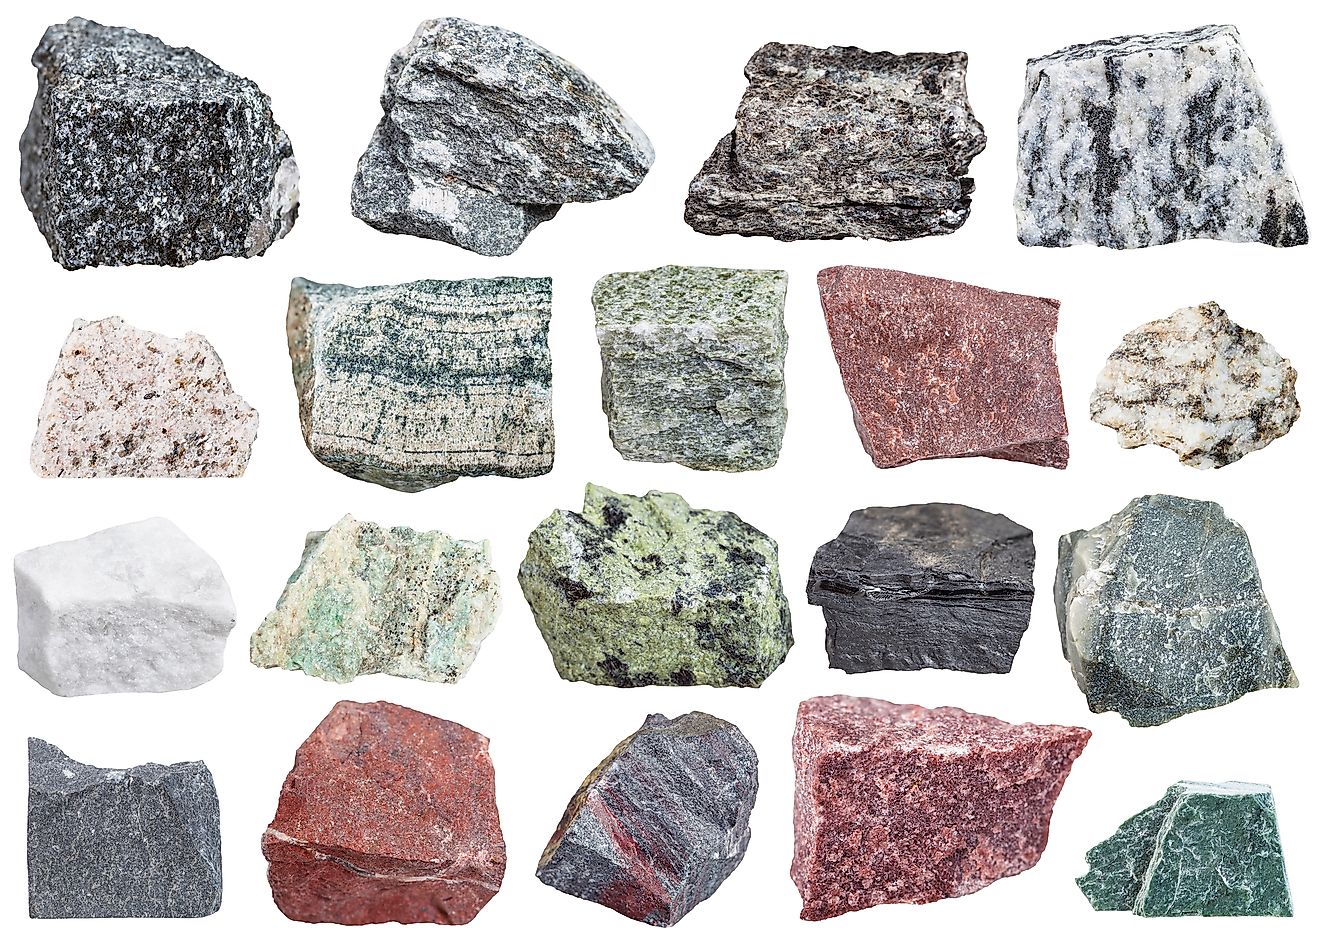 collection of metamorphic rock specimens - amphibolite, migmatite, quartzite, skarn, quartz, schist, listvenite, jasper, jaspillite, shale, coal, hornfels, slate, phyllite, gneiss, talc. Image credit: Vvoe/Shutterstock.com